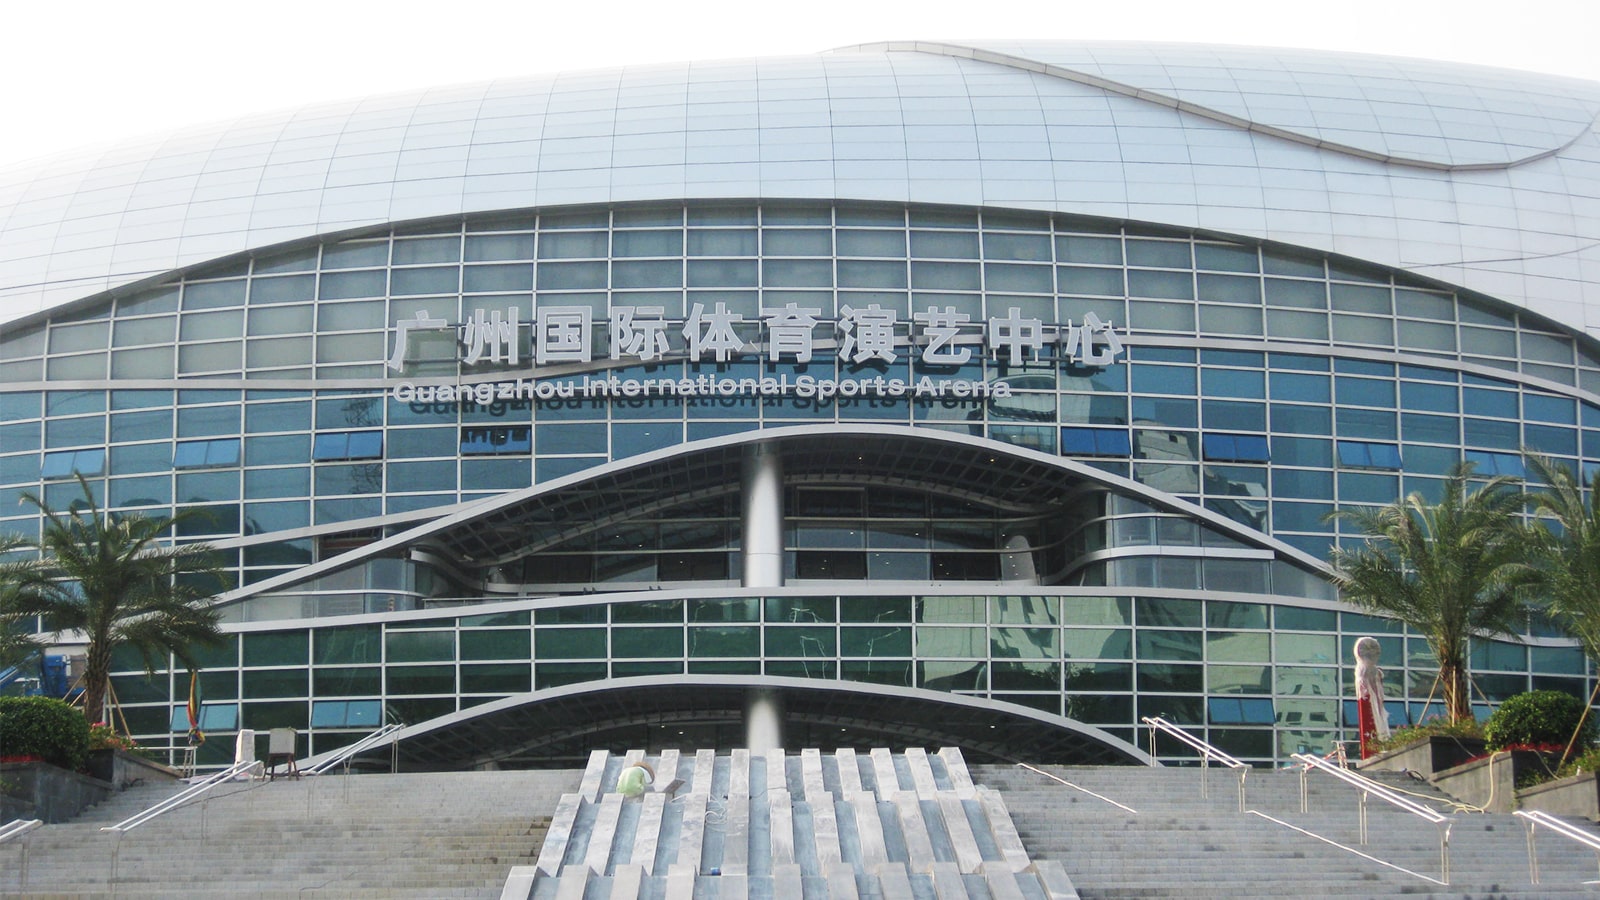 Guangzhou international sports arena